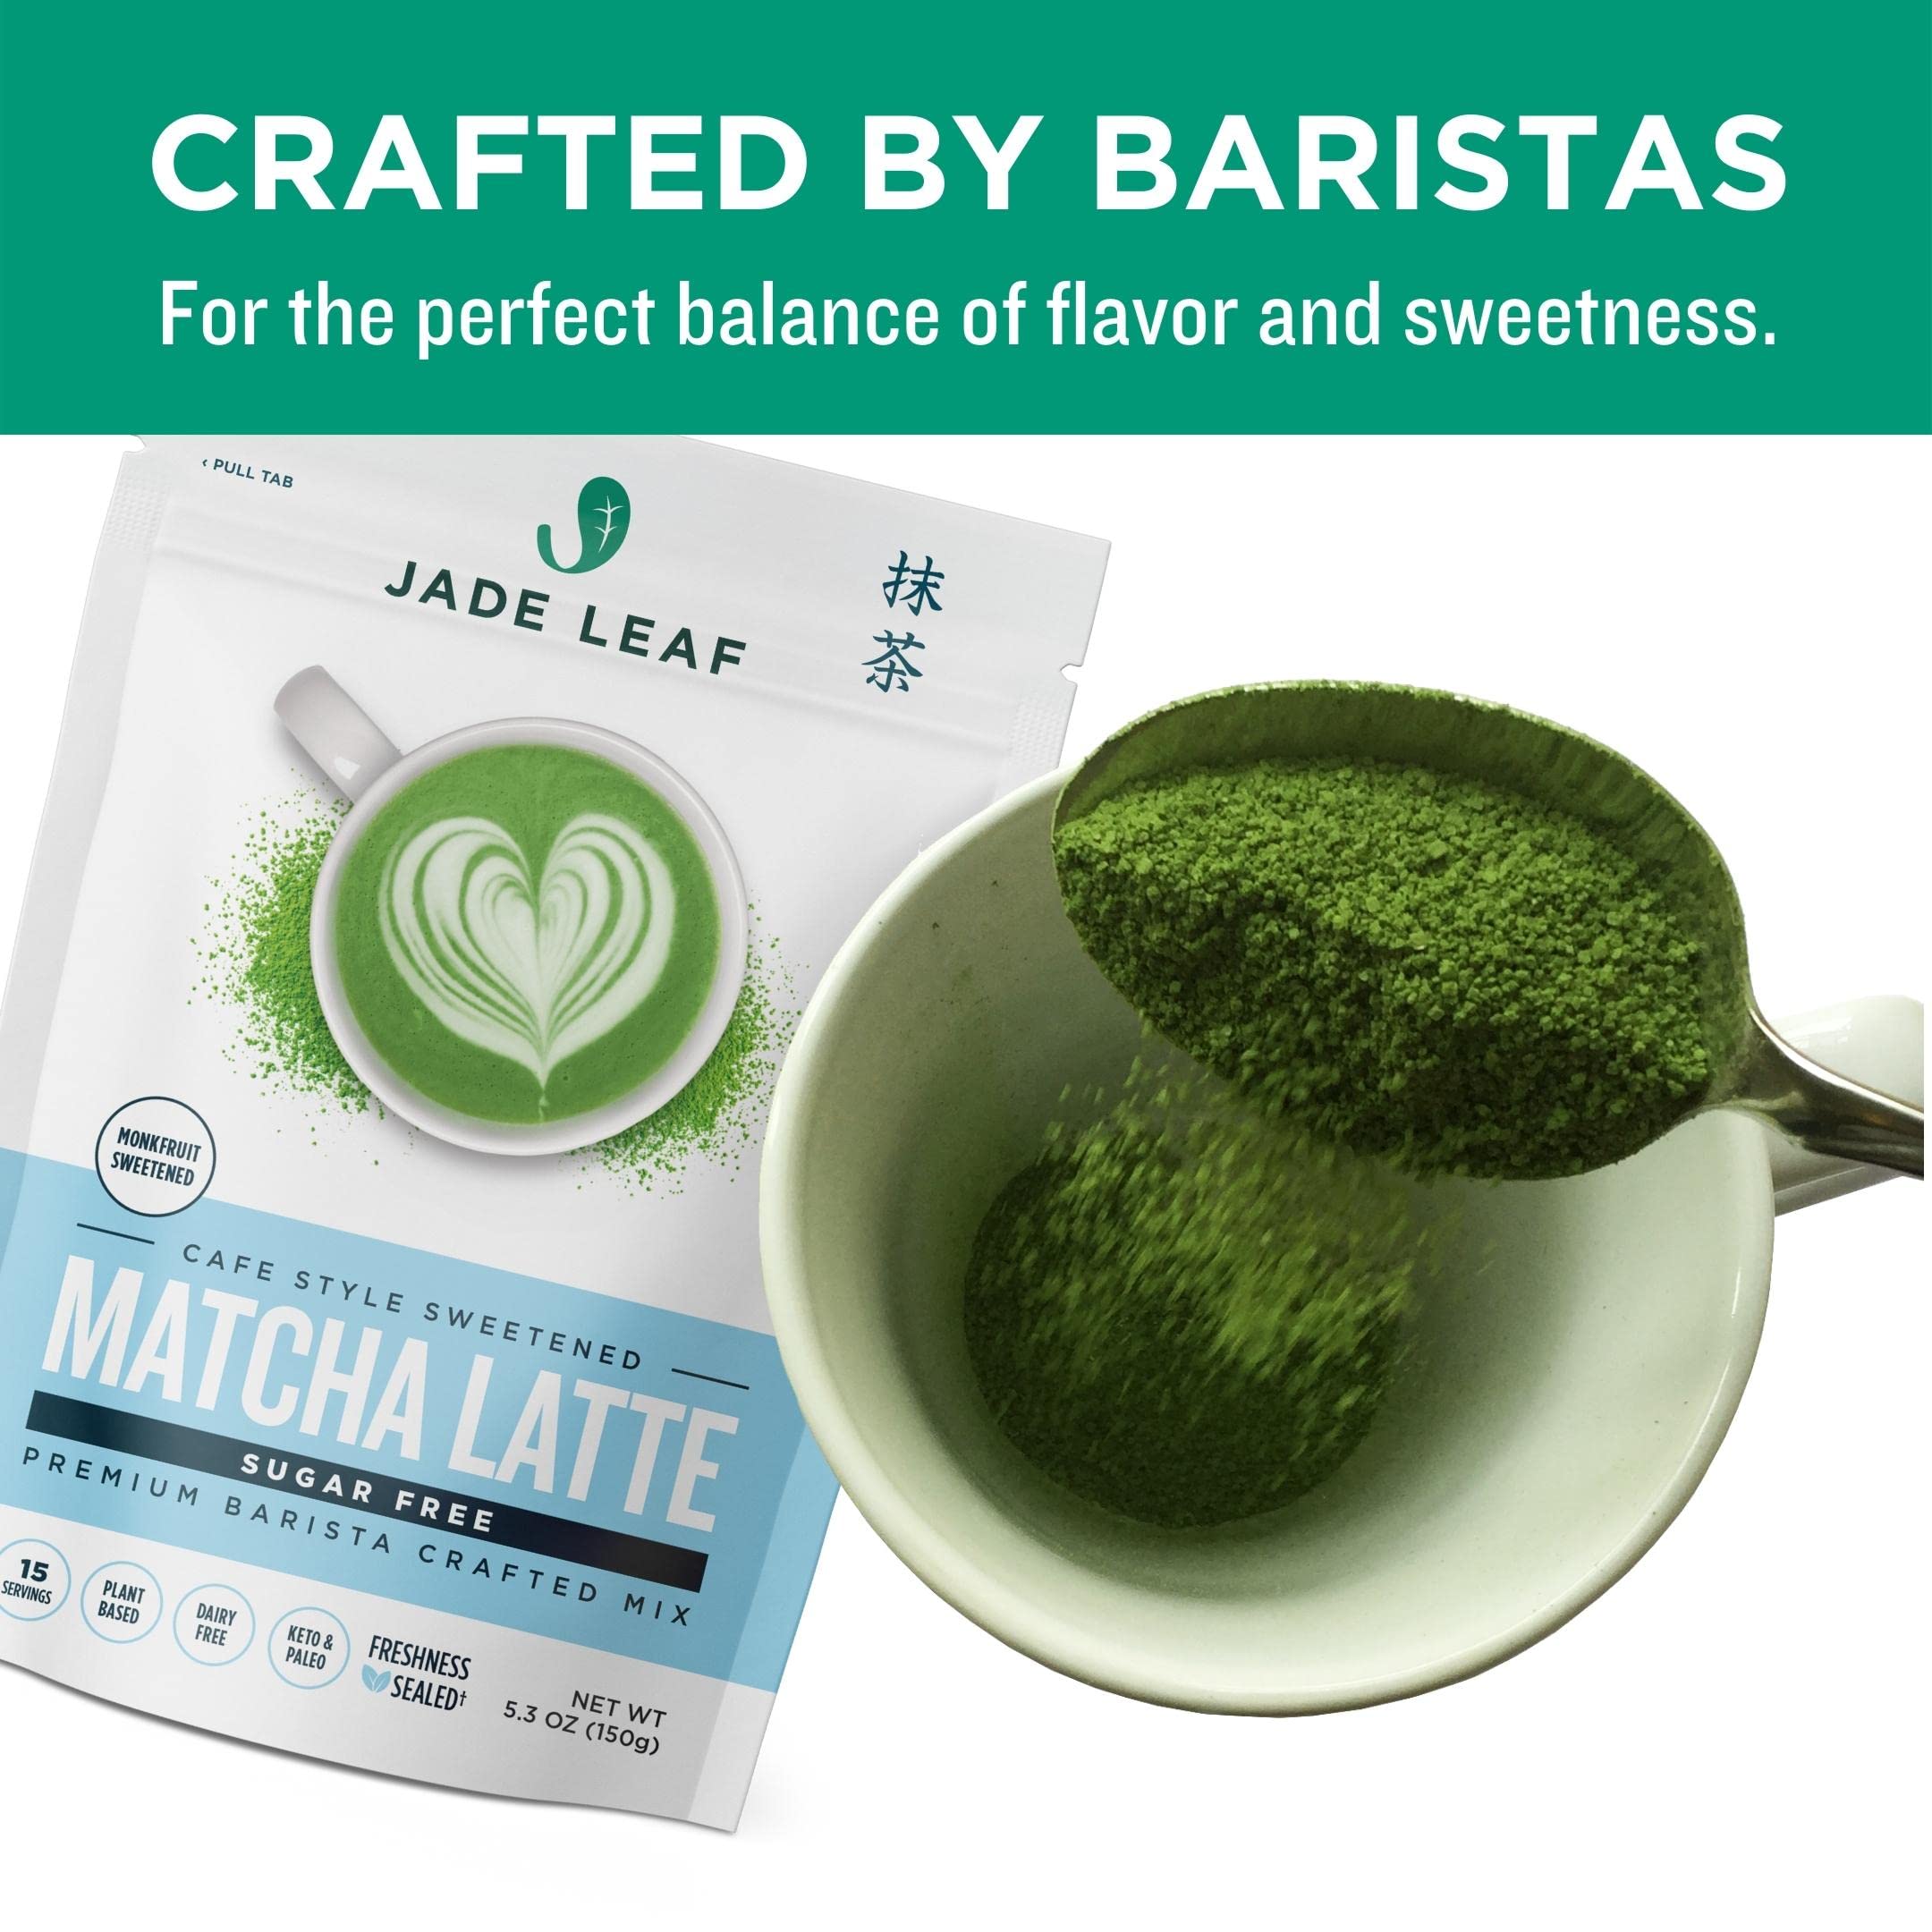 Jade Leaf Matcha Organic Café Style Sugar Free Matcha Latte Green Tea Powder, Premium Barista Crafted Mix, Authentically Japanese, 15 Servings (5.3 Ounces)